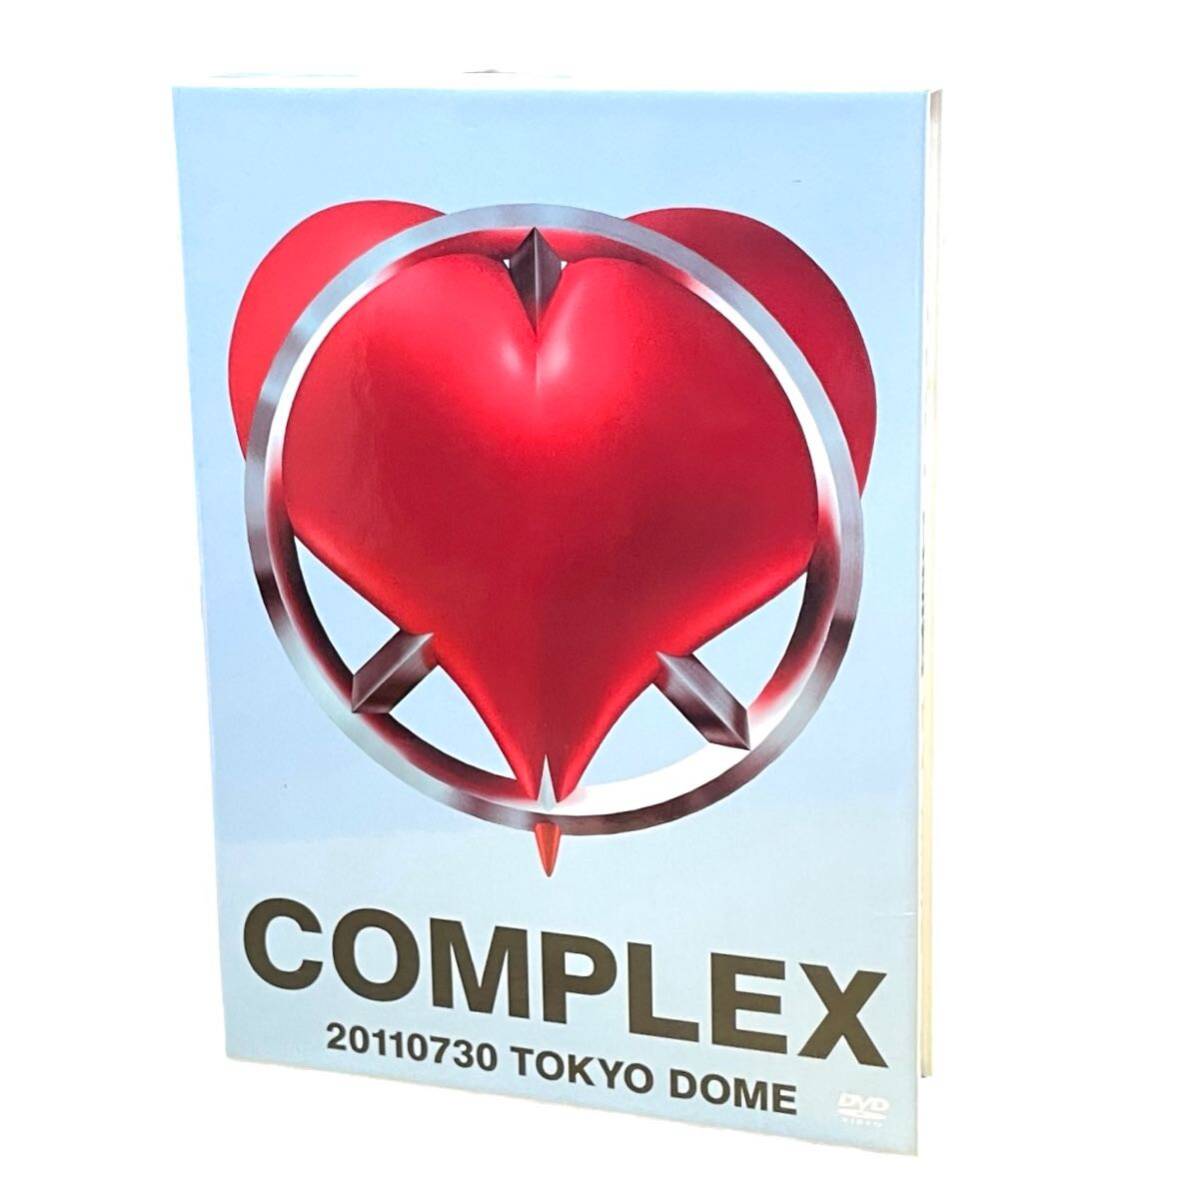 COMPLEX 日本一心 20110730 東京ドーム DVD コンプレックス 吉川晃司 布袋寅泰 復興支援_画像2